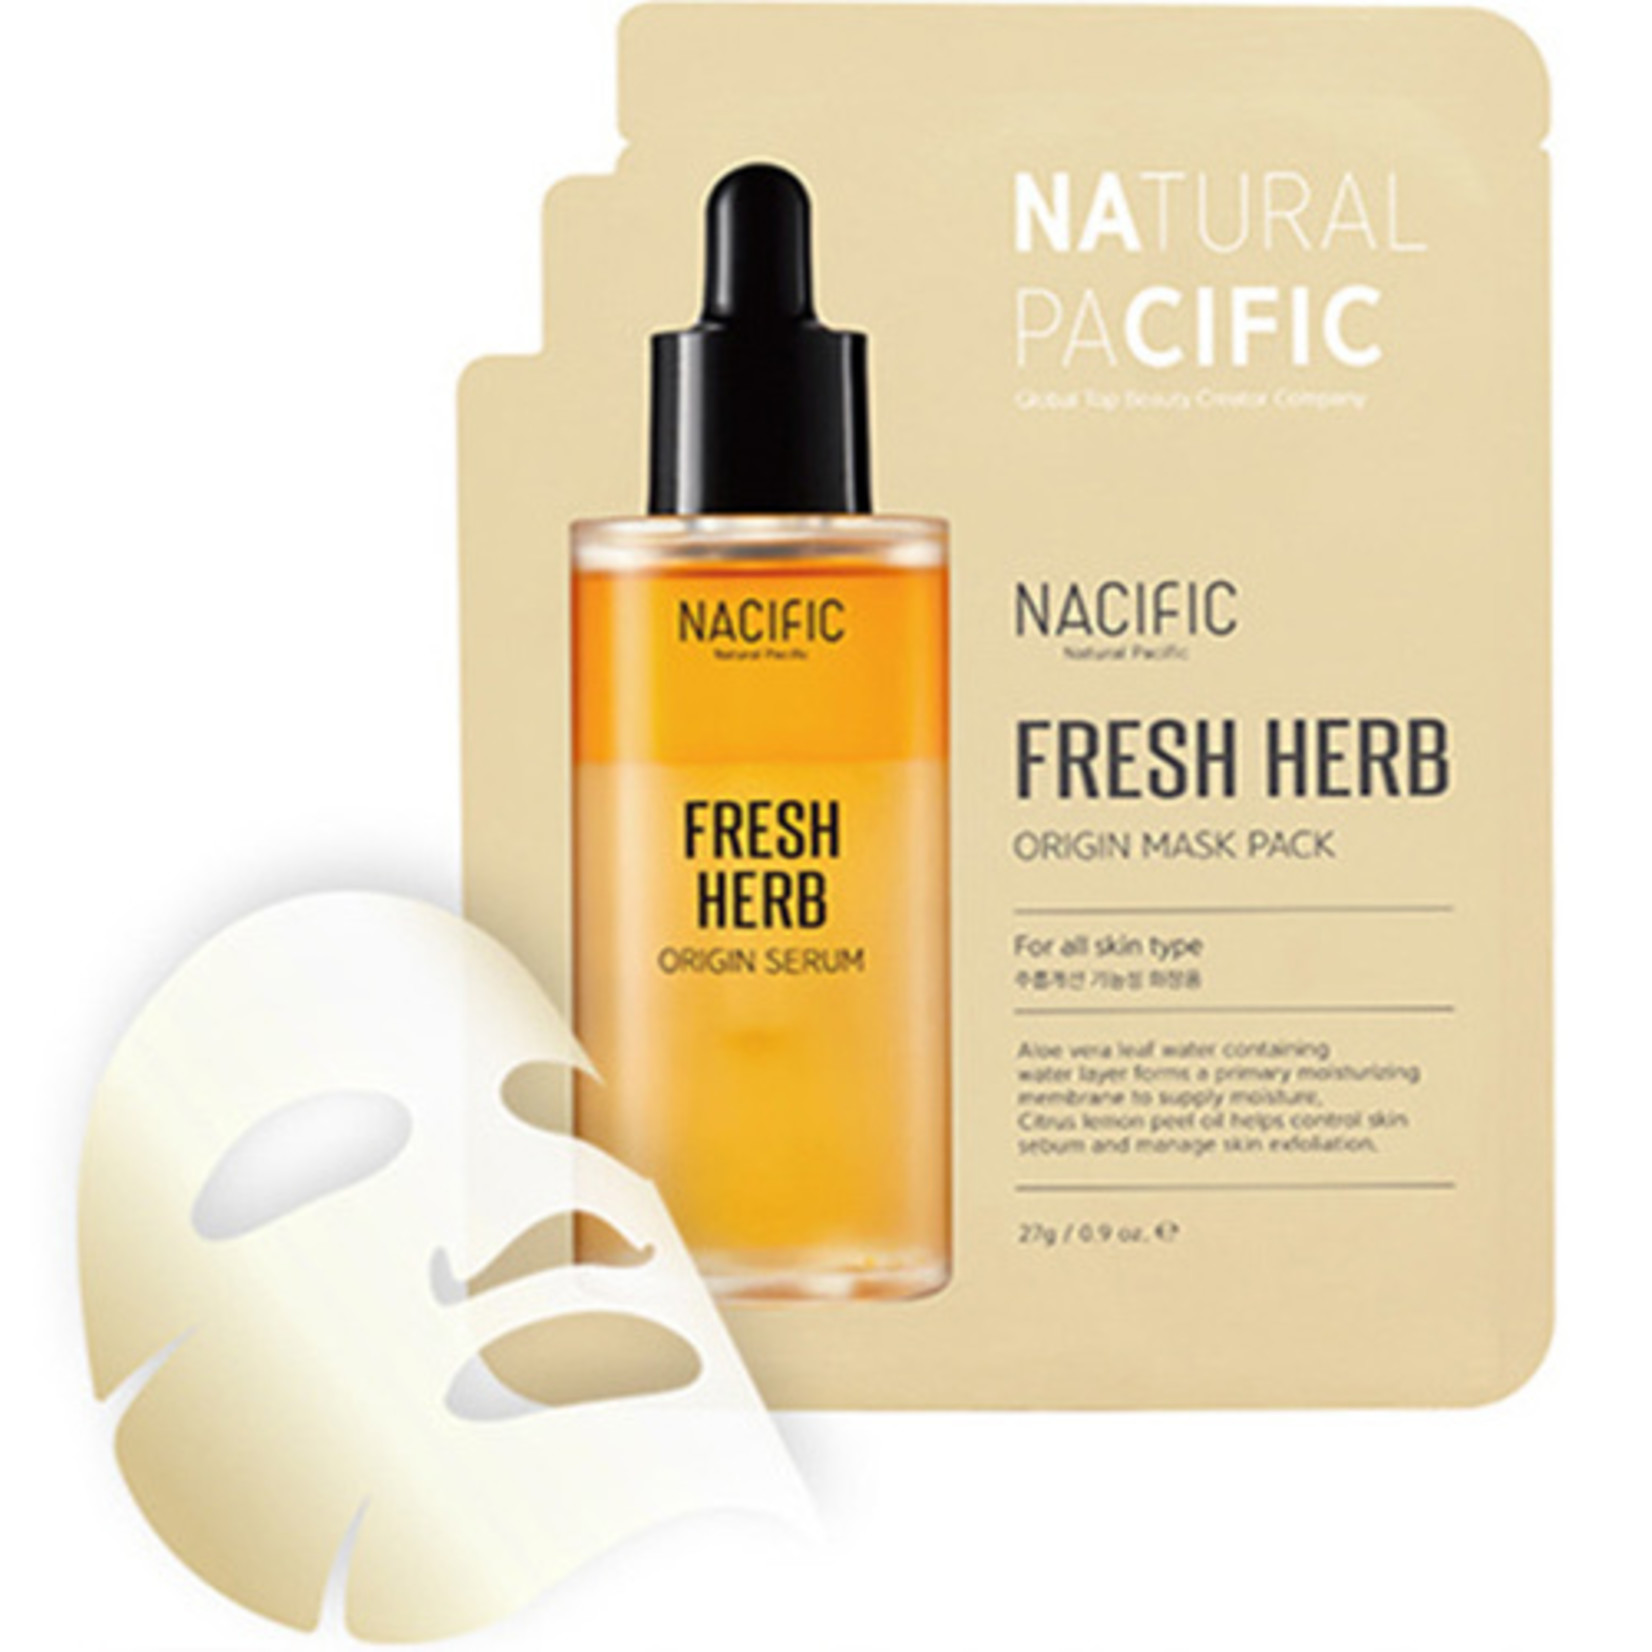 Nacific Fresh Herb Origin Mask Pack